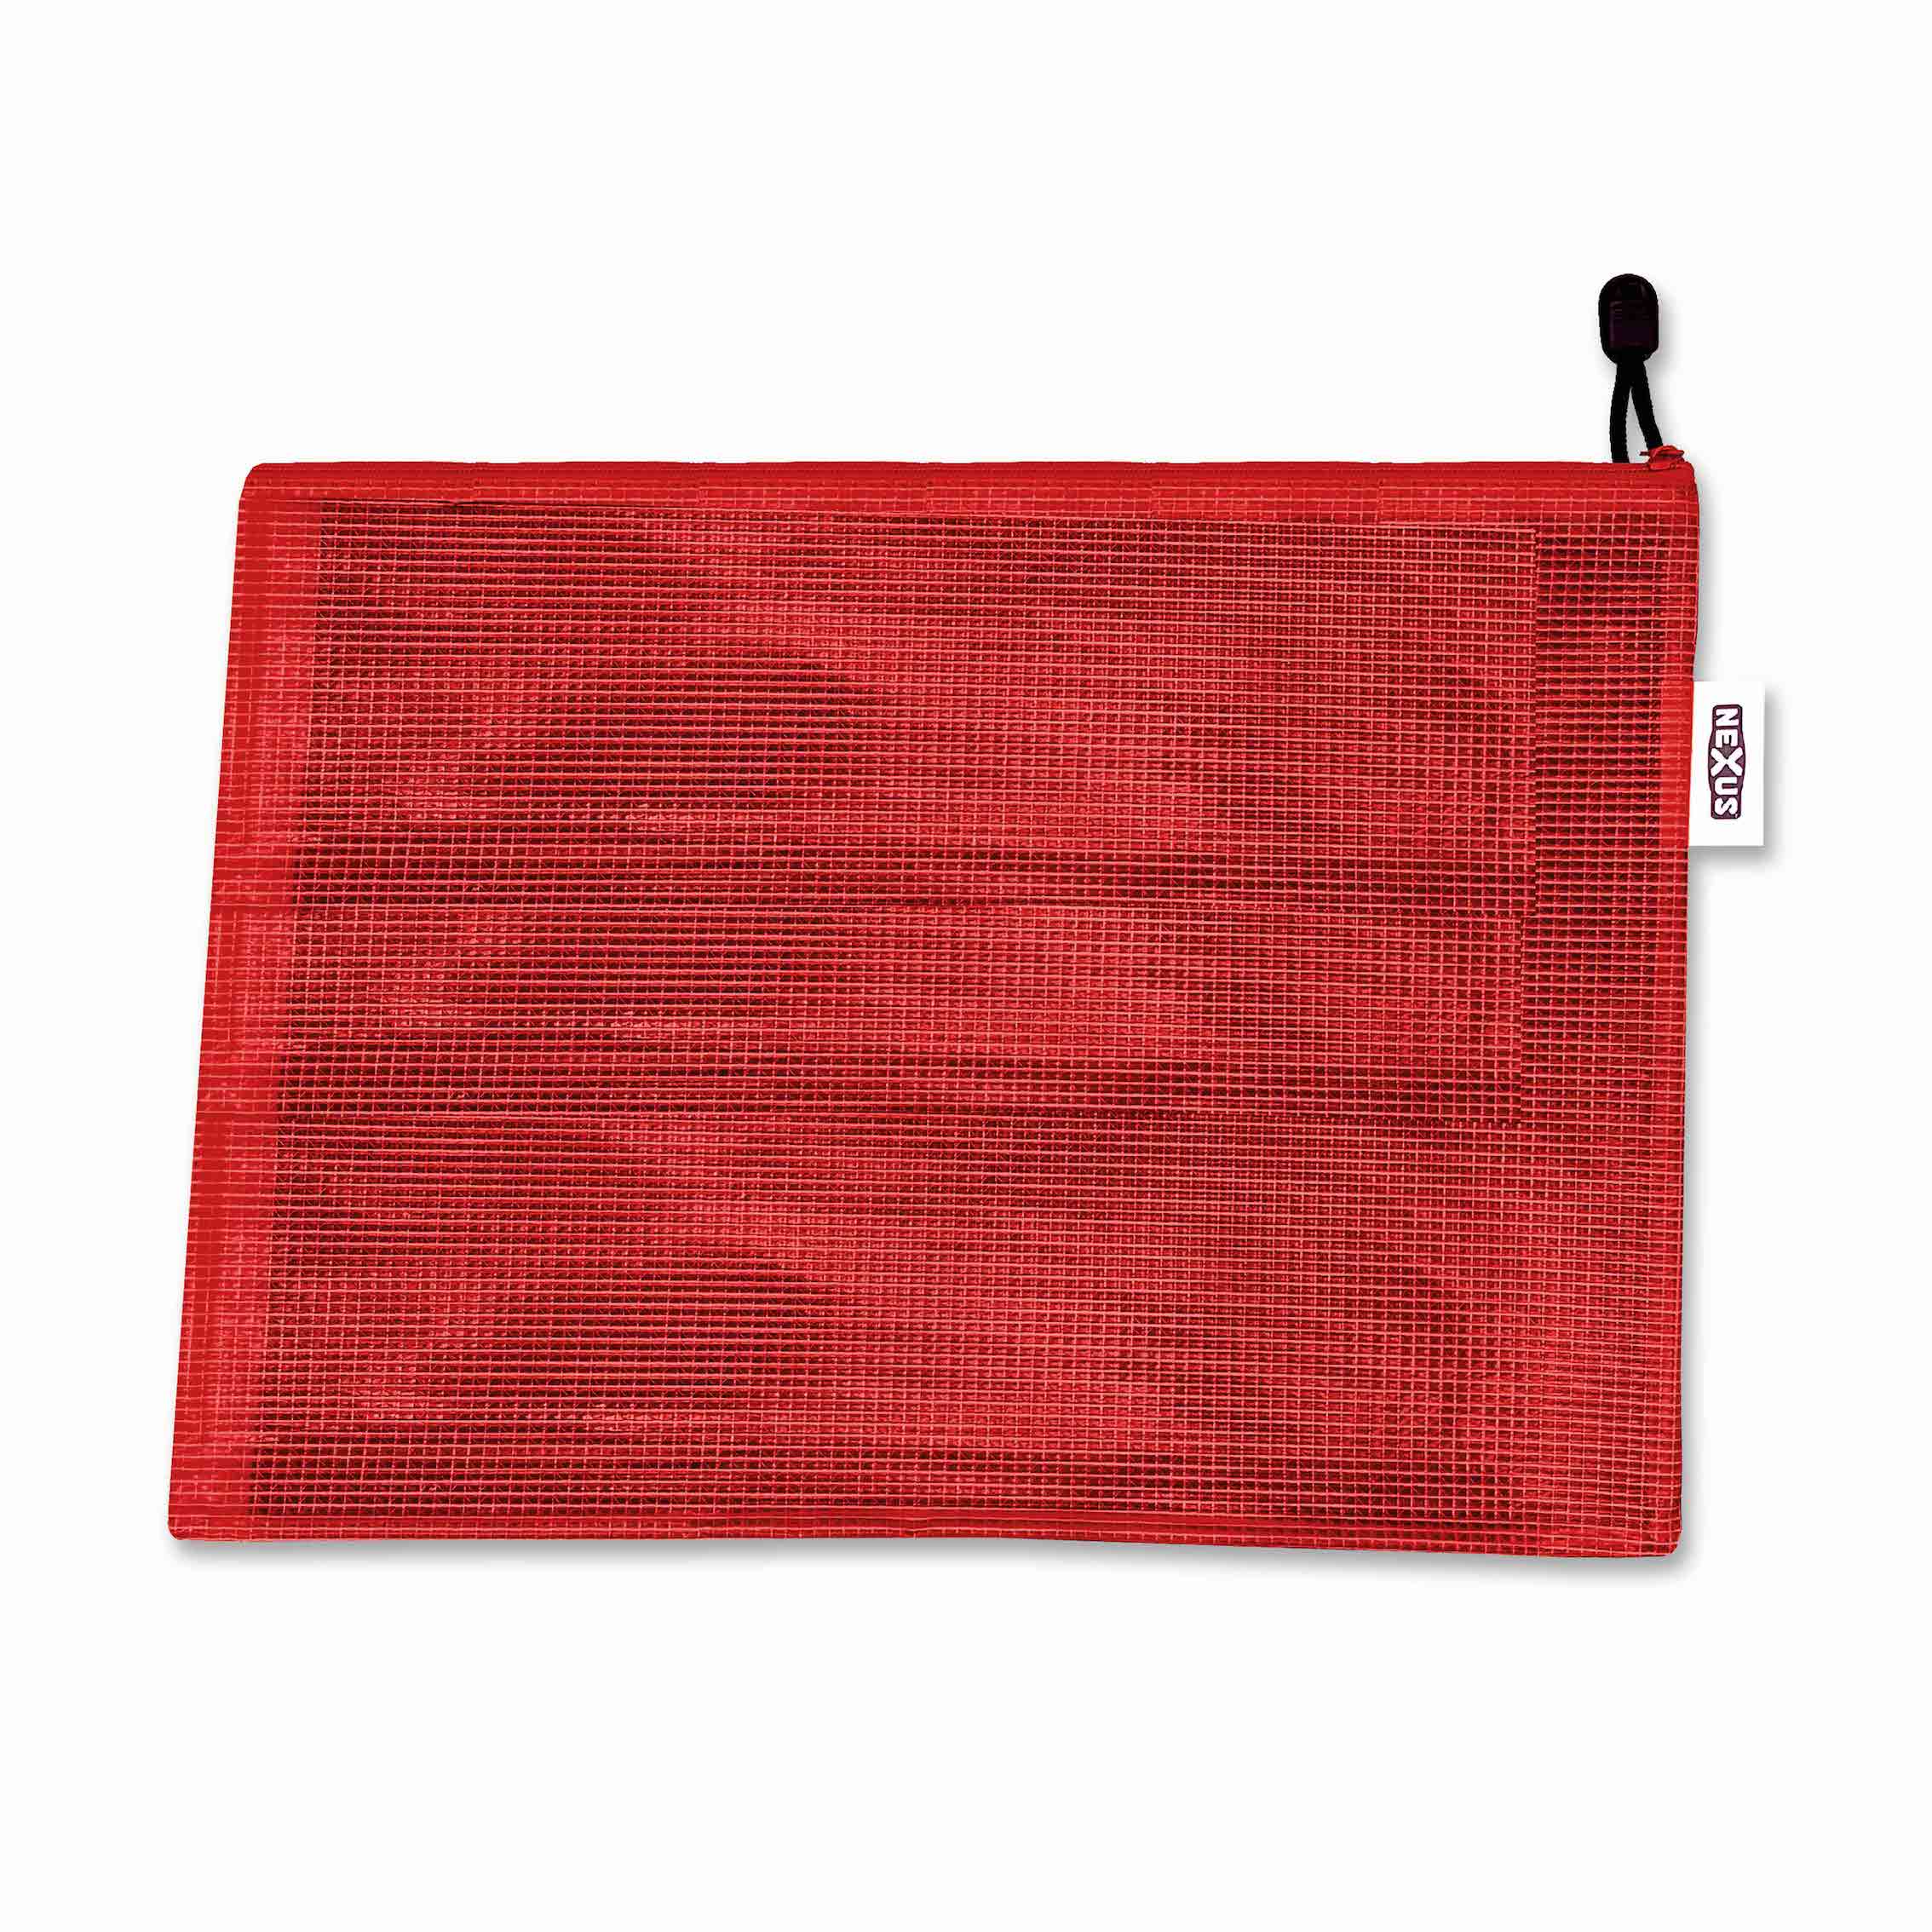 Essential Tough Kit Bag 26cm x 36 cm Red – 1 pc